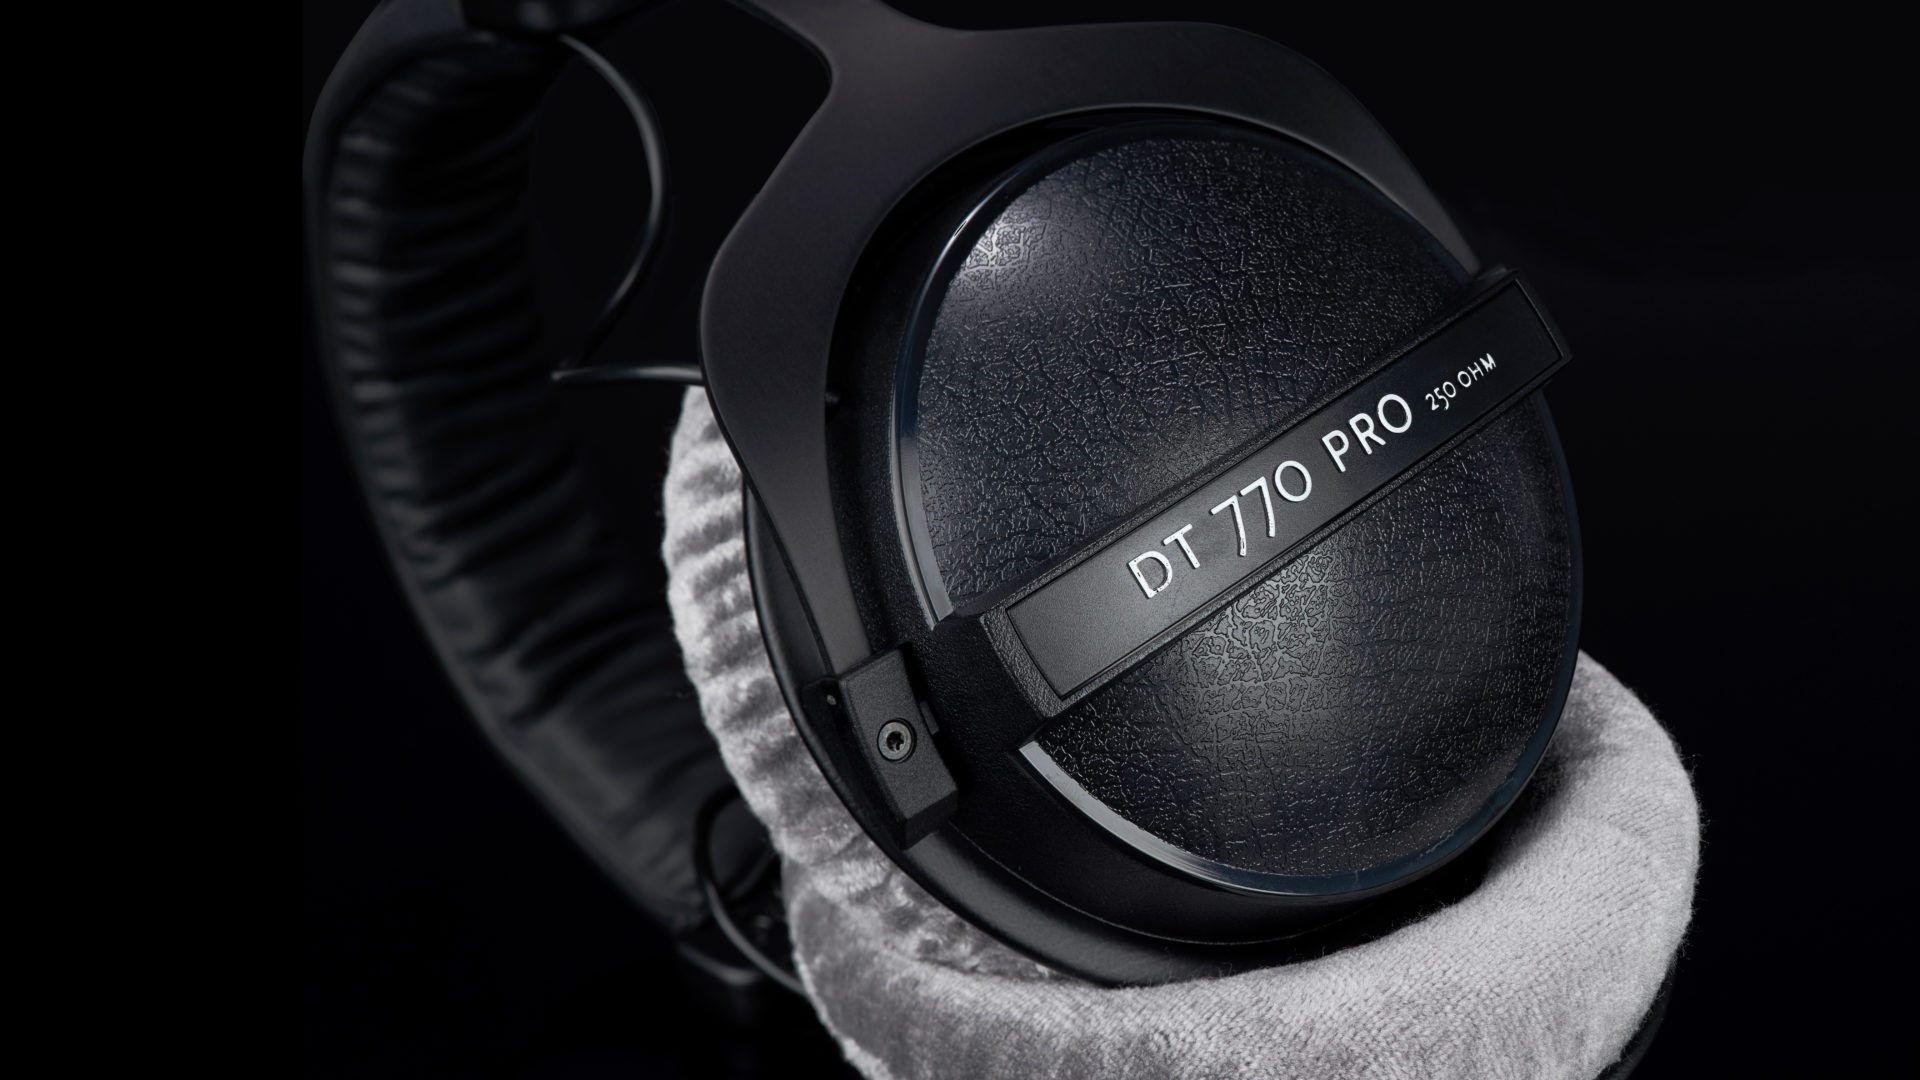 beyerdynamic DT 770 PRO Closed Studio Headphones - 250 Ohms